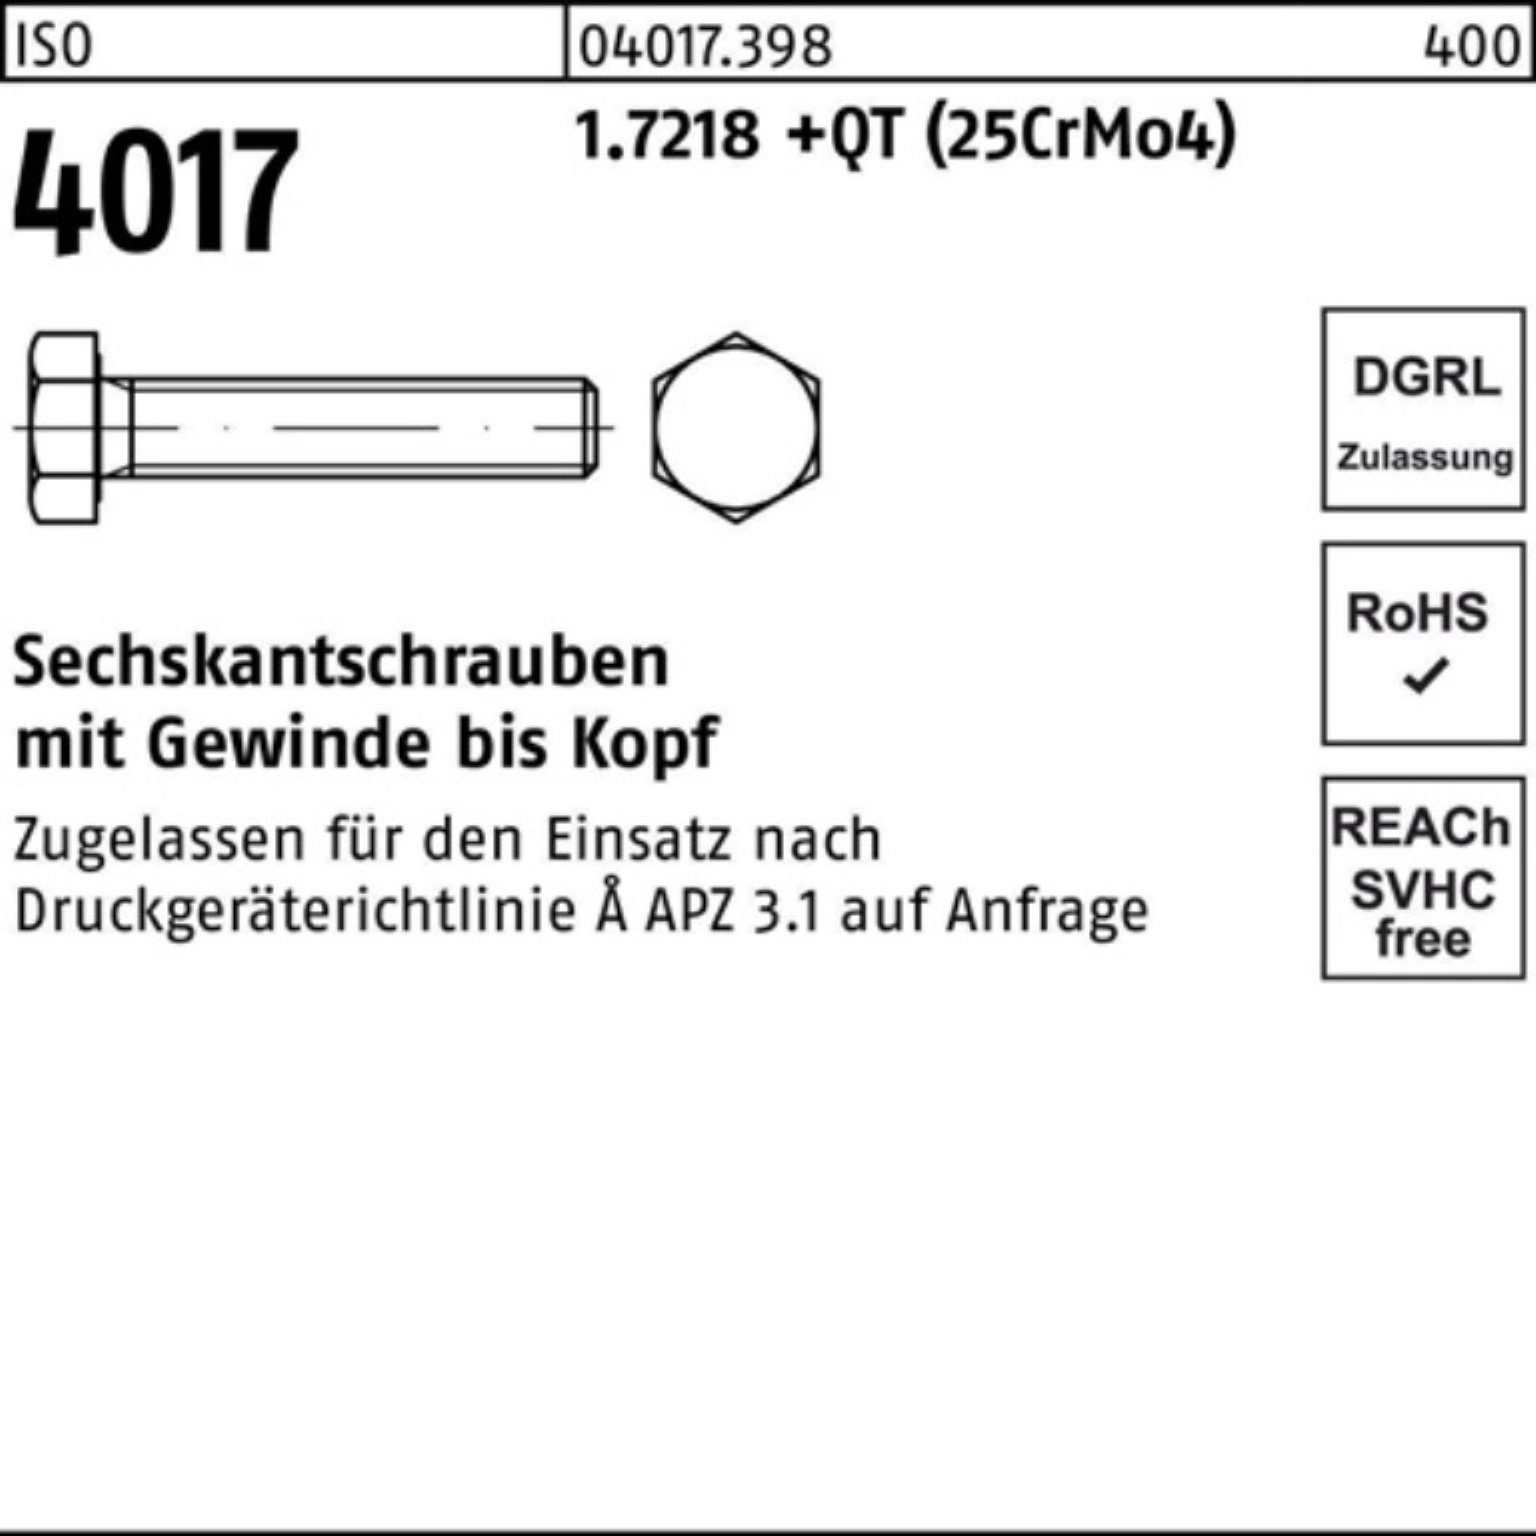 Qualitätsgarantie Bufab Sechskantschraube 100er Pack Sechskantschraube 1.7218 (25CrMo4) M36x ISO 70 4017 +QT VG